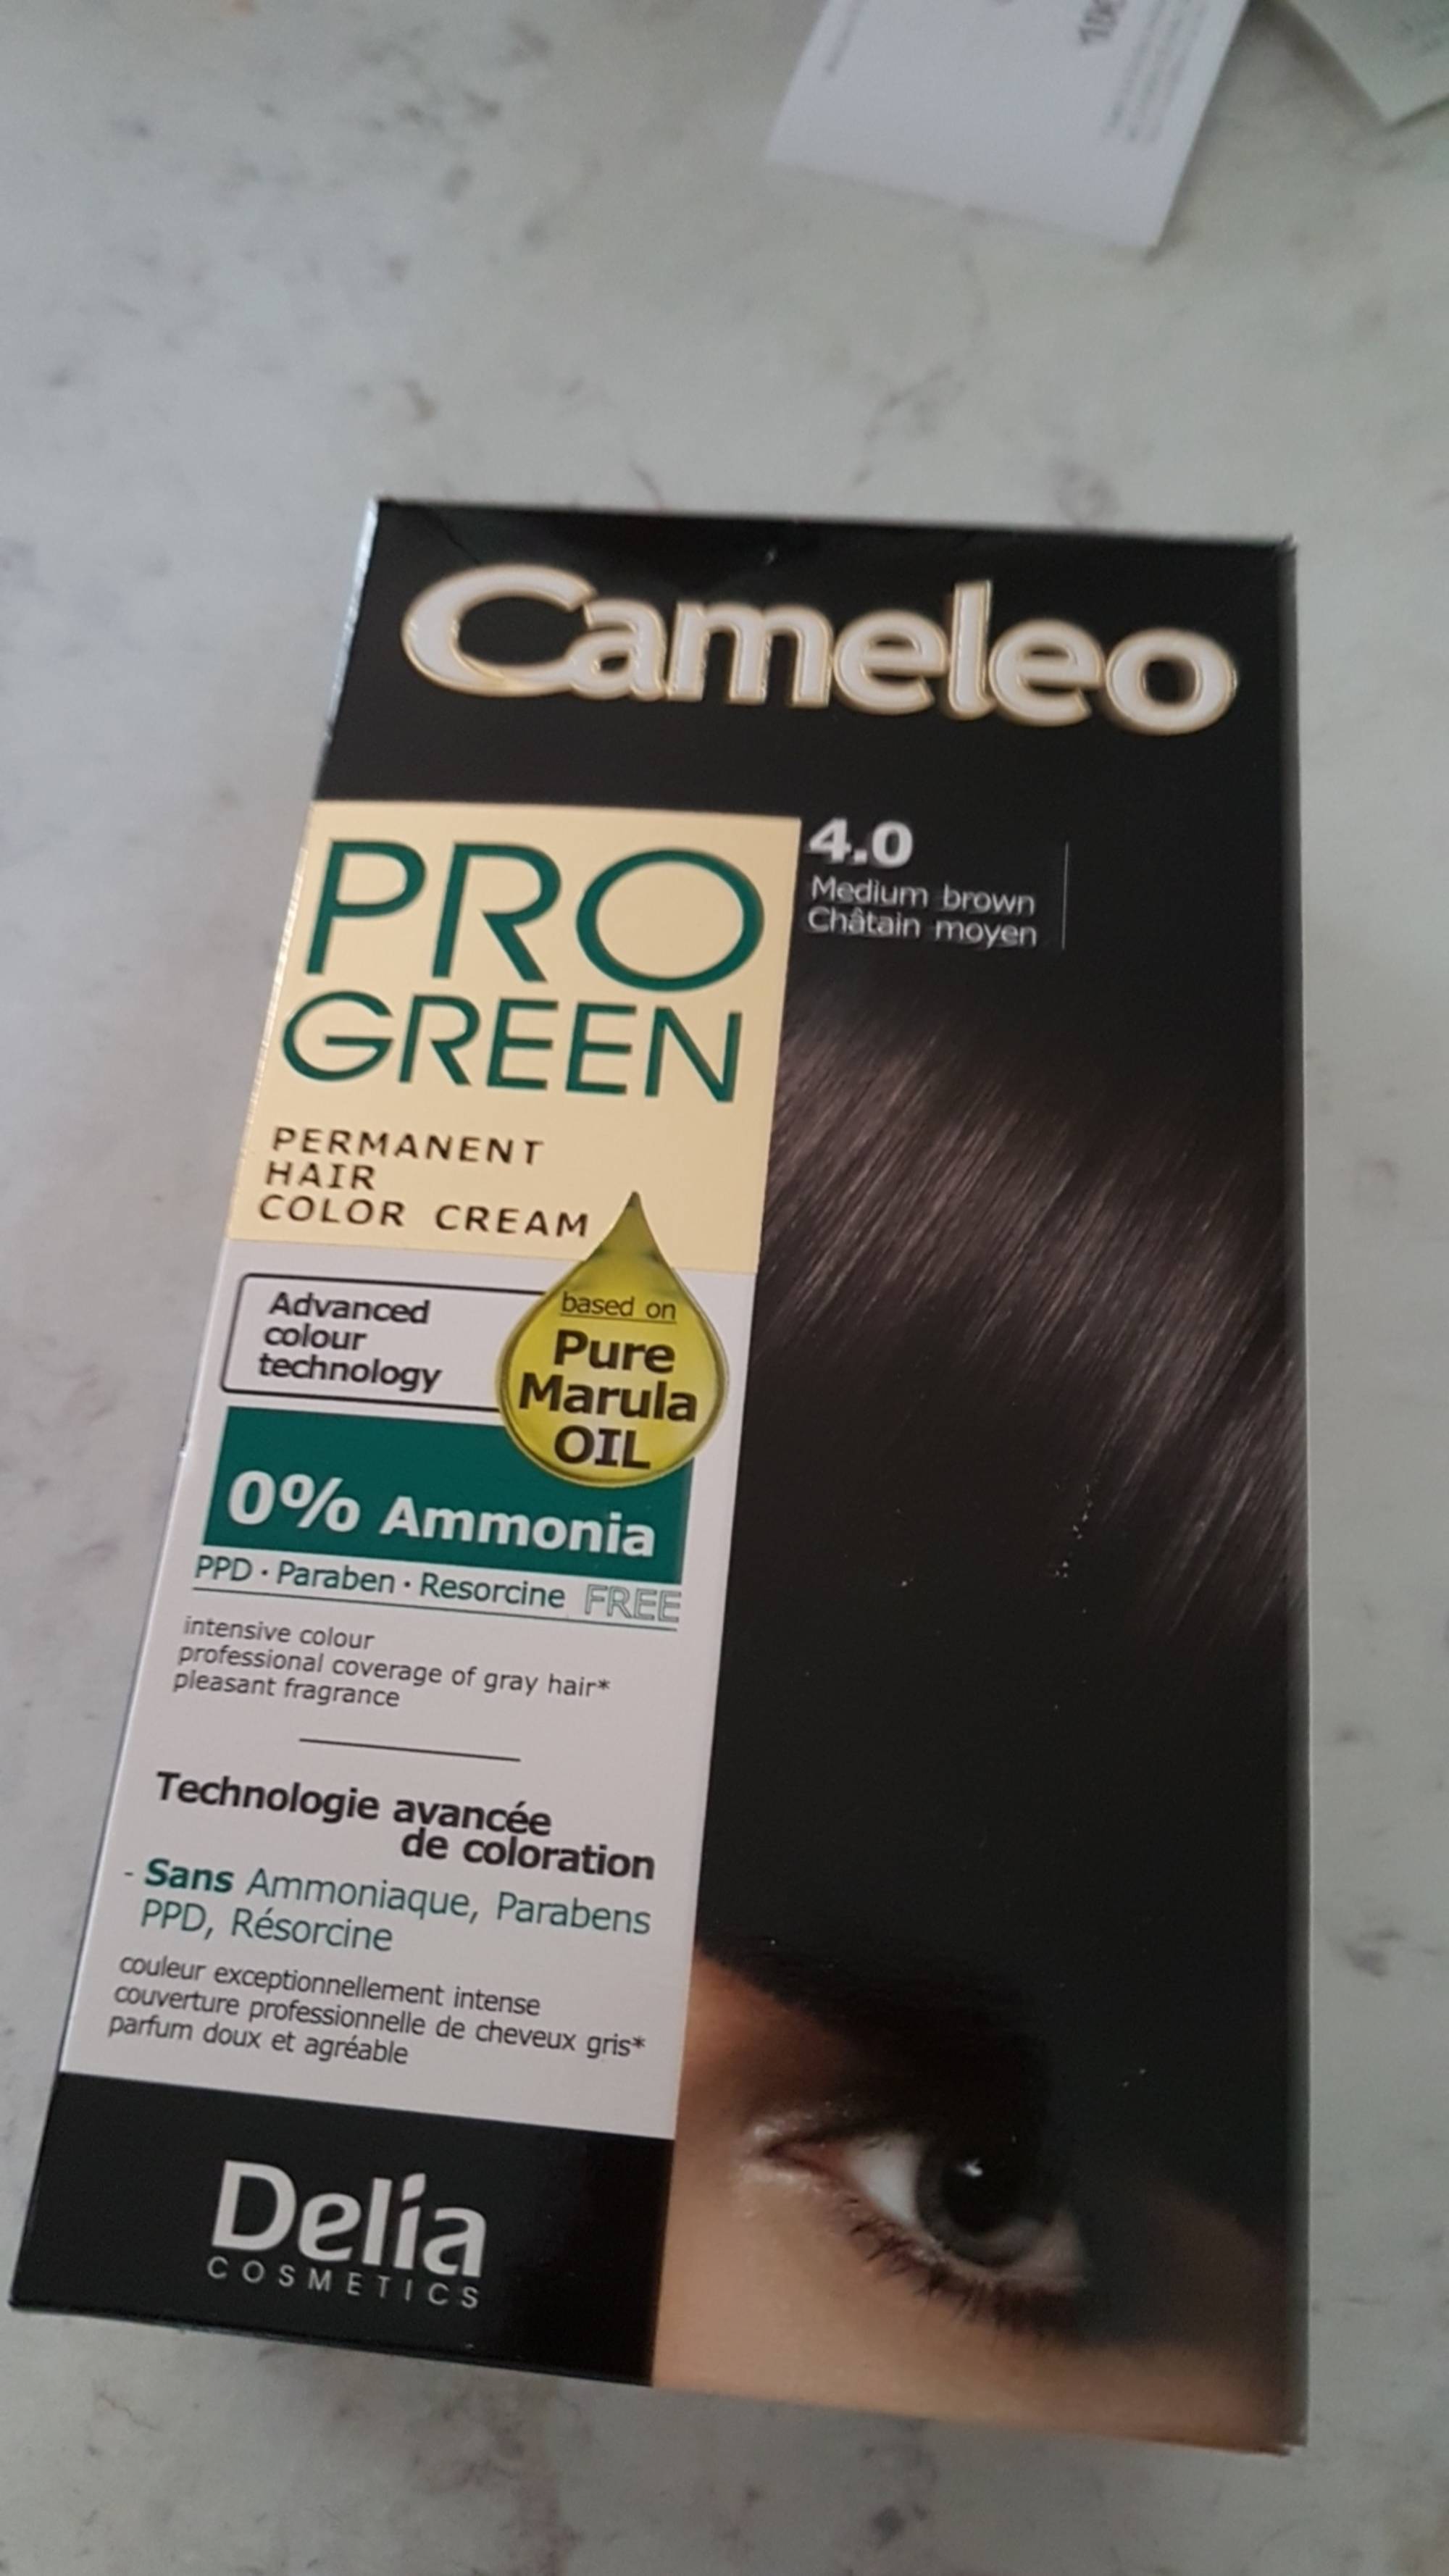 DELIA COSMETICS - Cameleo - Permanent hair color cream 4.0 medium brown